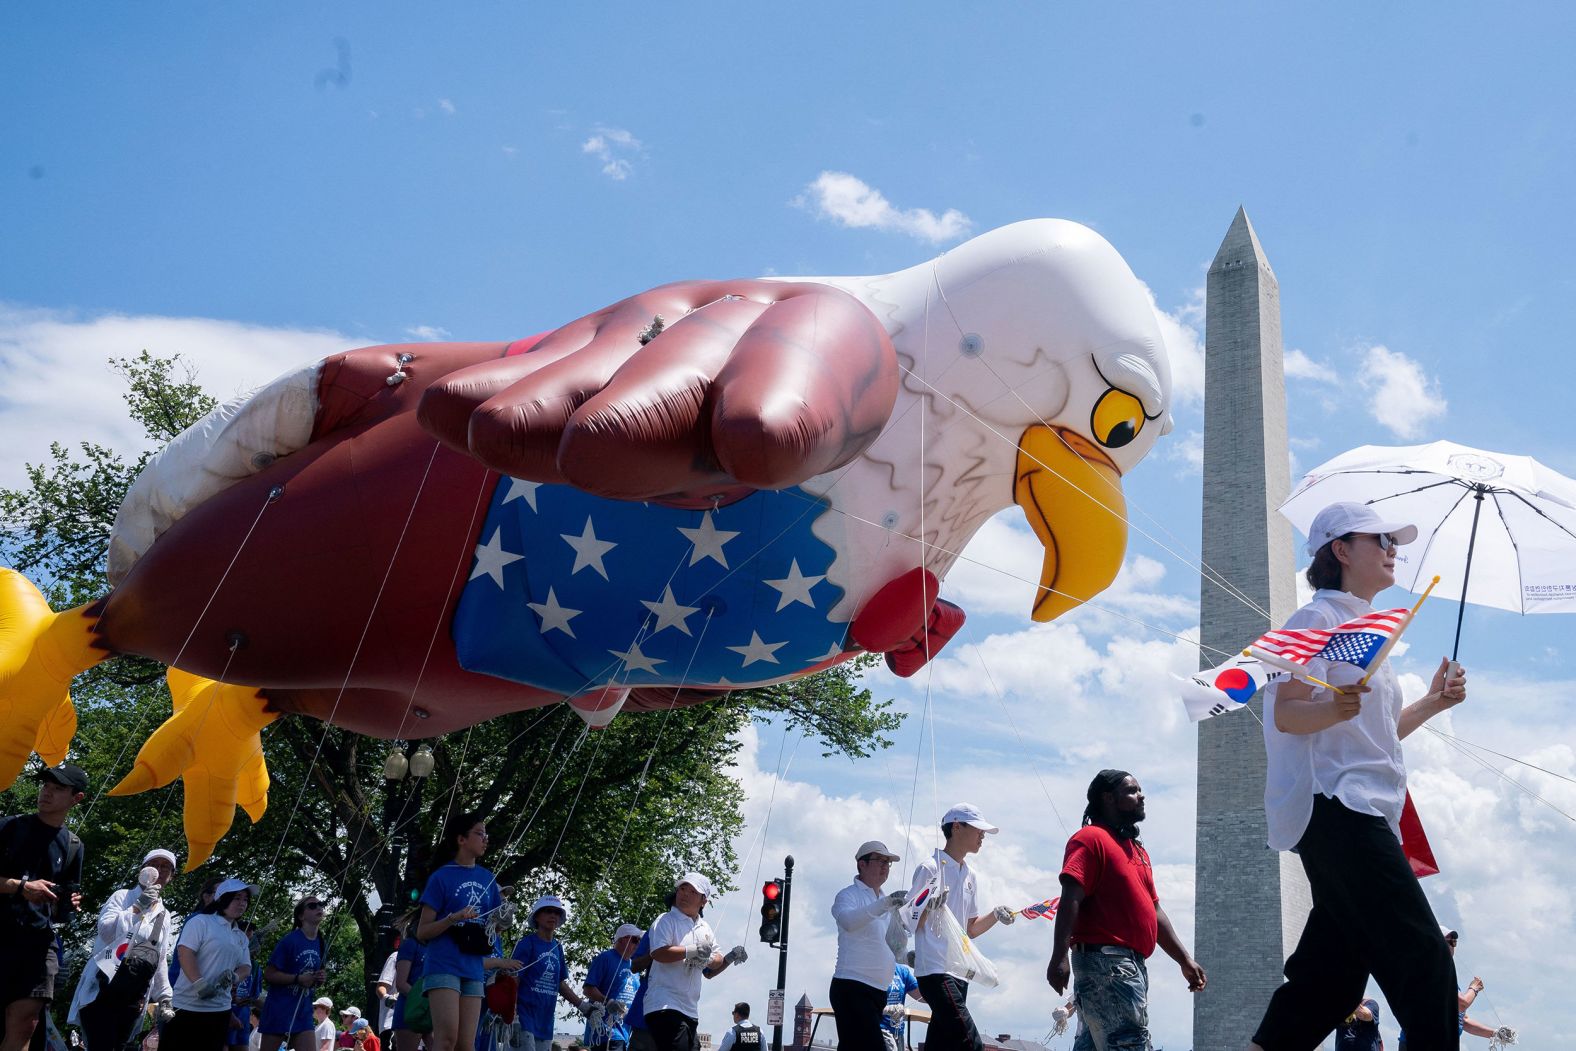 An eagle balloon is flown near the Washington Monument during a parade on Tuesday.